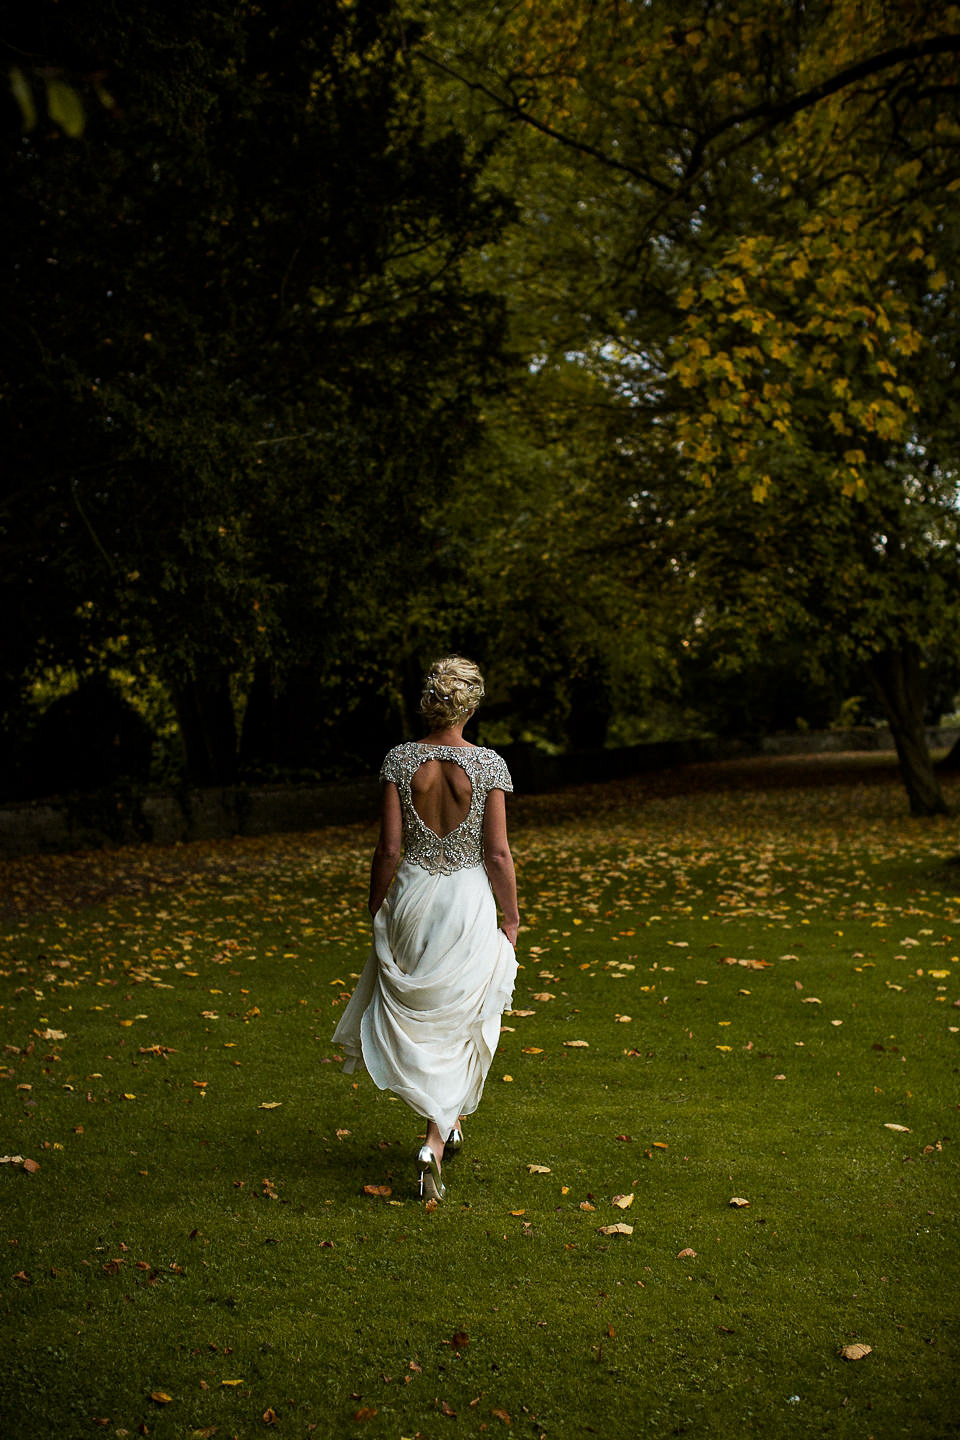 A Jenny Packham dress for an elegant black tie wedding at Aynhoe Park. Photography by Matt Parry.